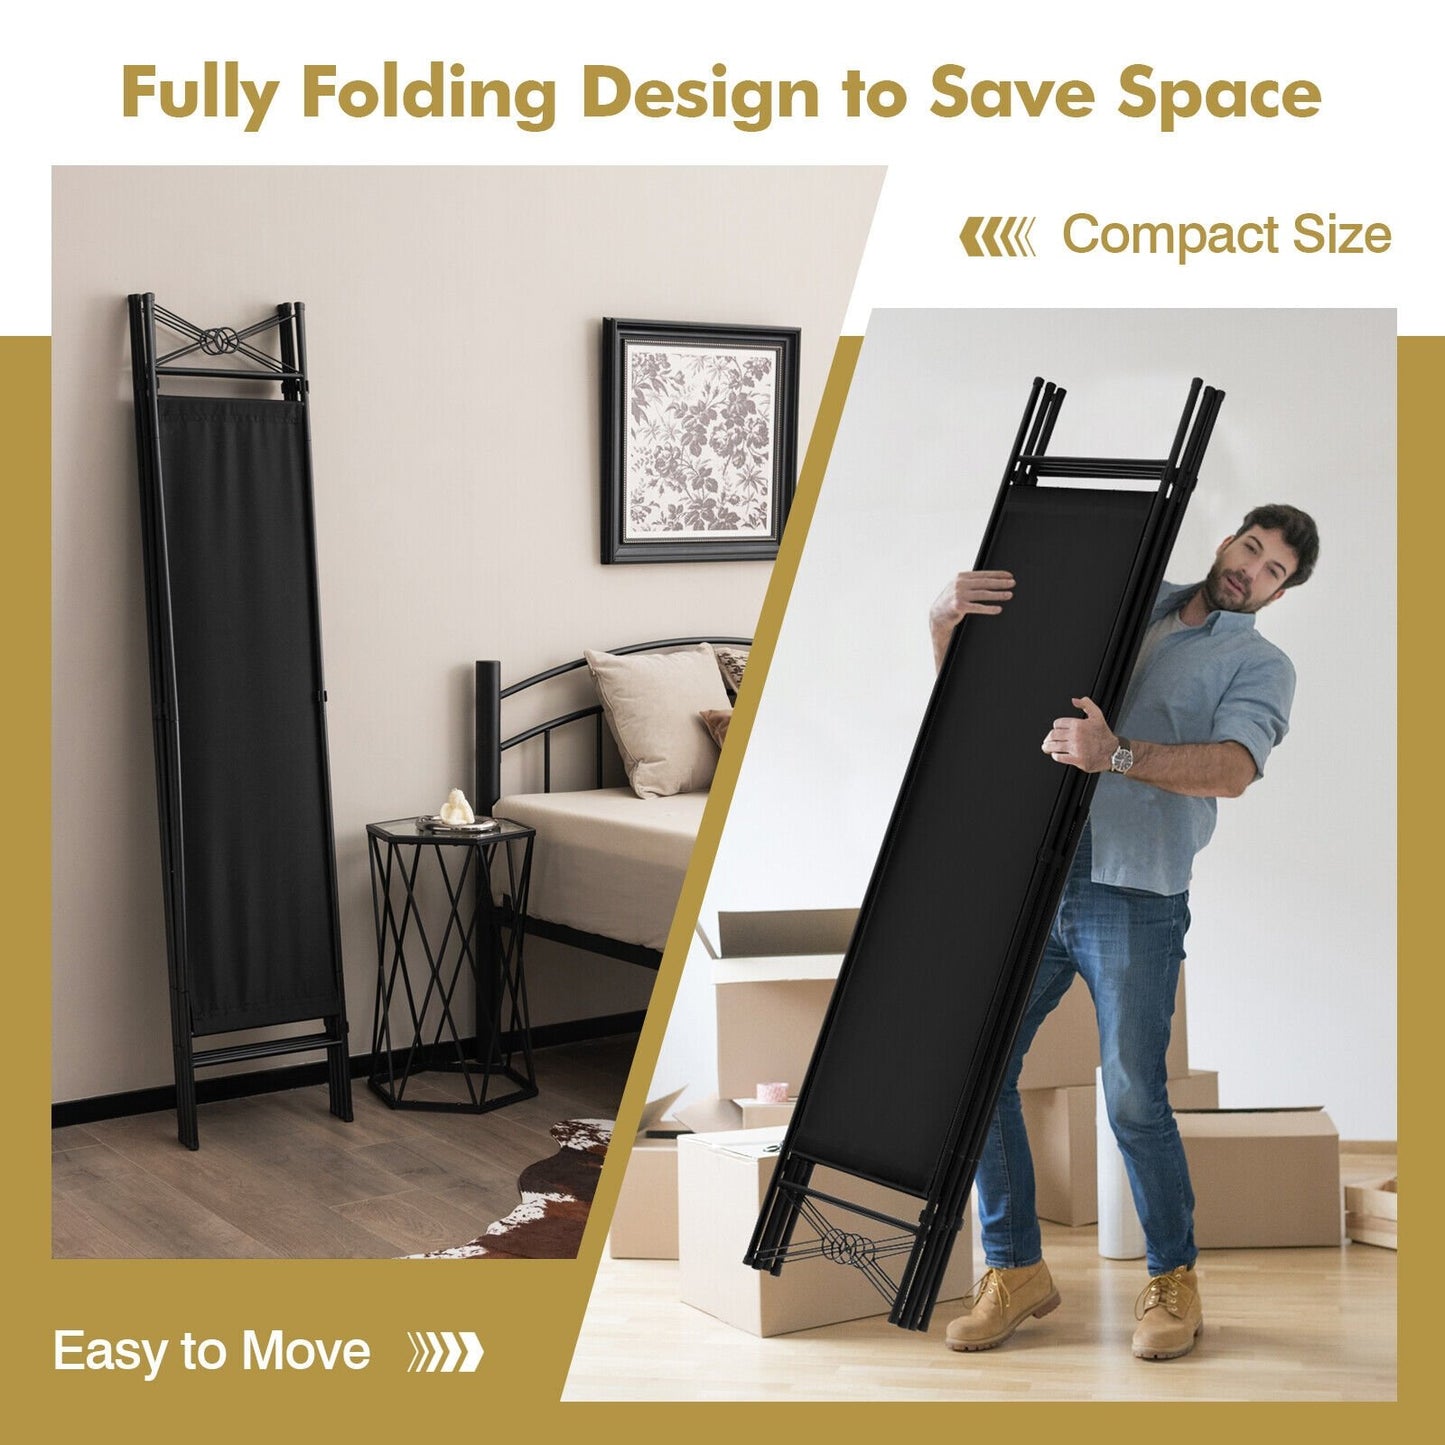 6 Feet 4-Panel Folding Freestanding Room Divider, Black - Gallery Canada